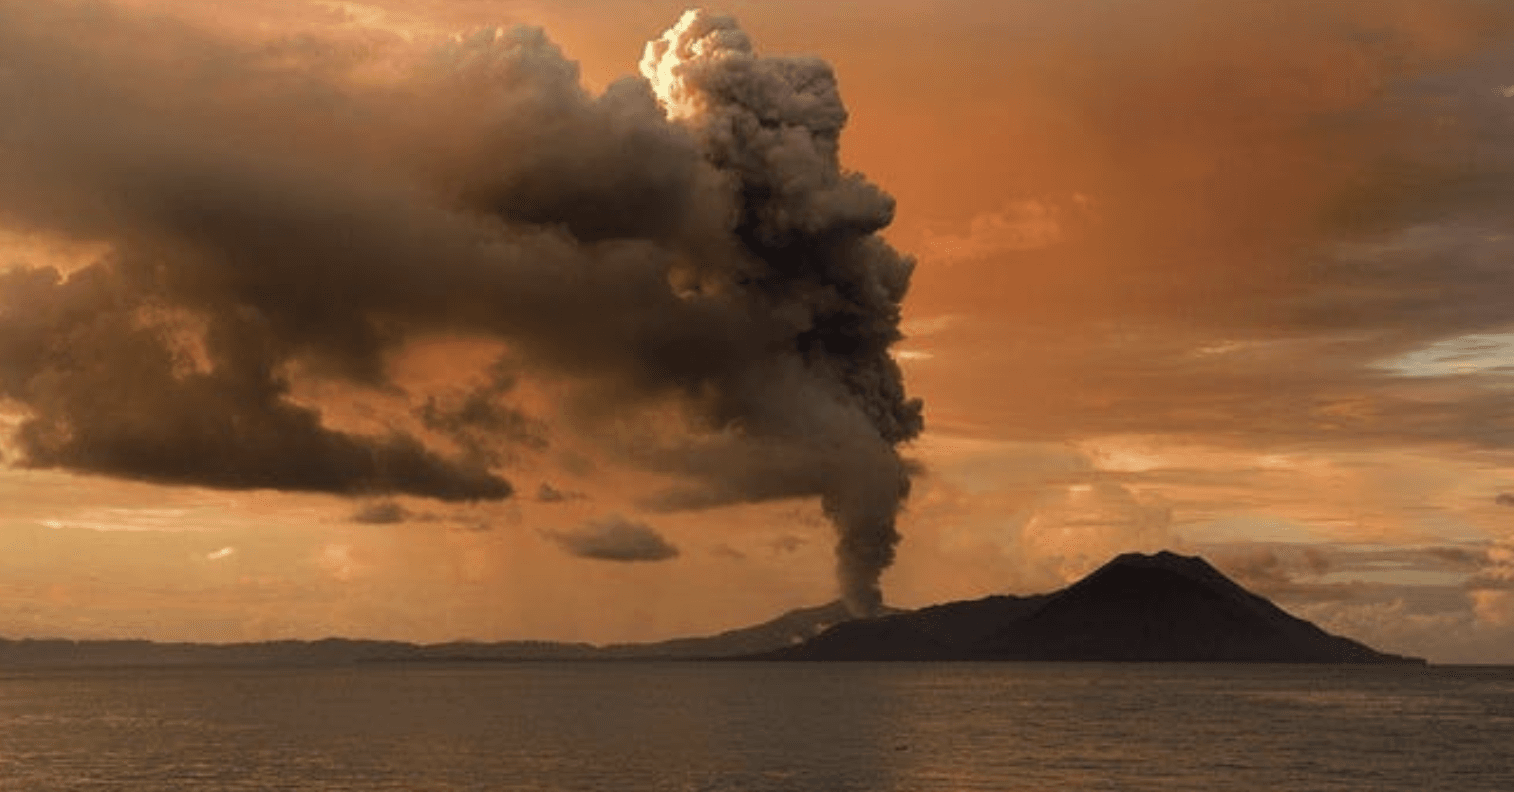 tambora volcano eruption 1815